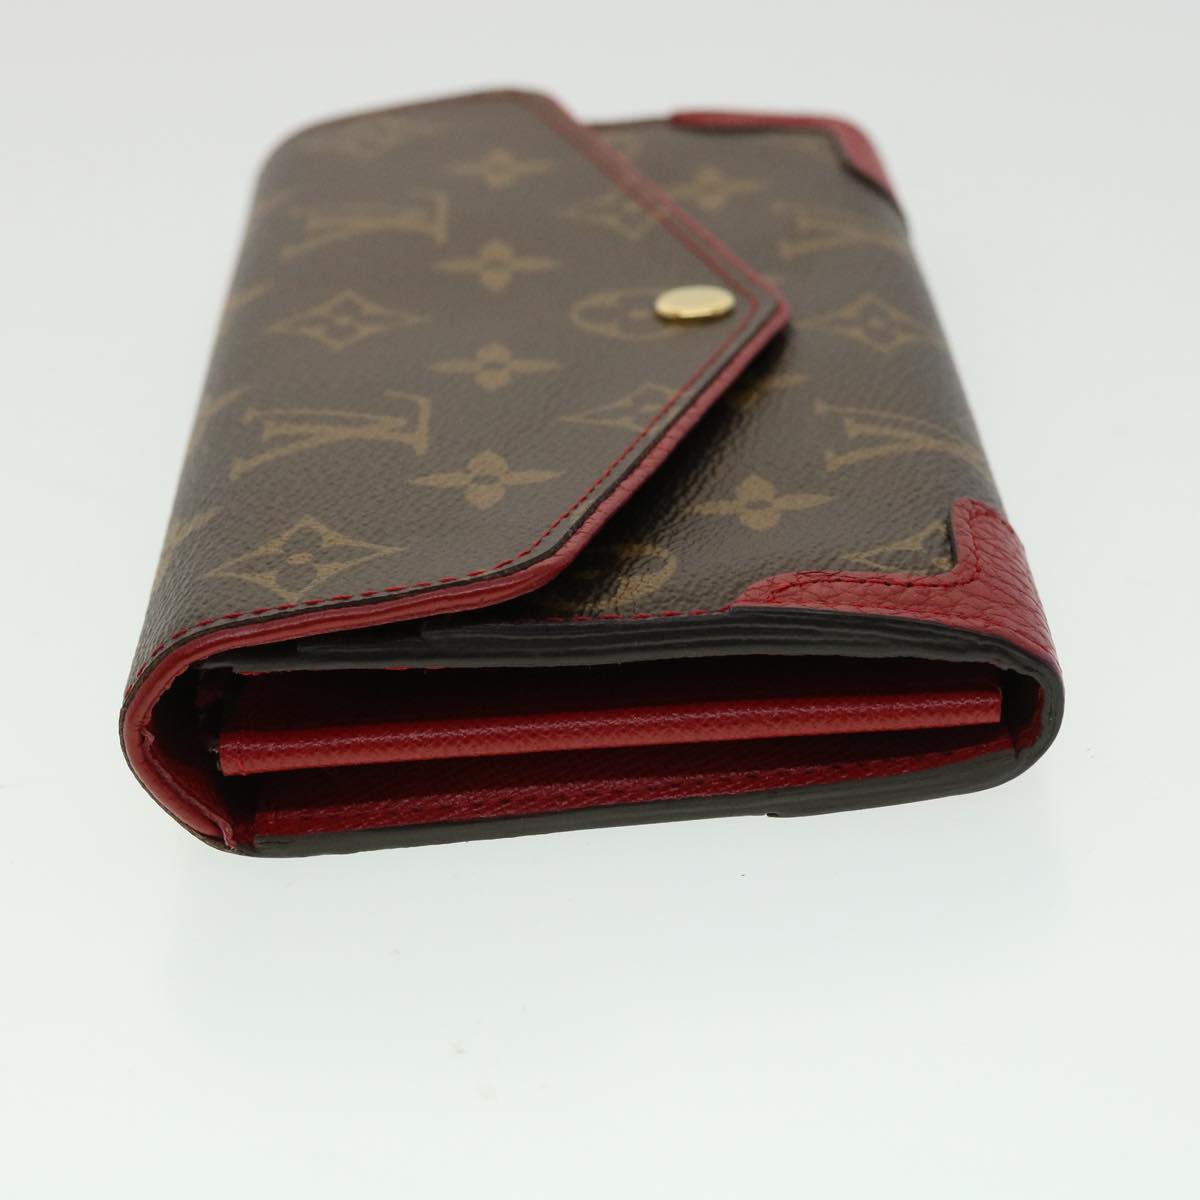 Shop Louis Vuitton PORTEFEUILLE SARAH Sarah wallet retiro (M61184) by SkyNS